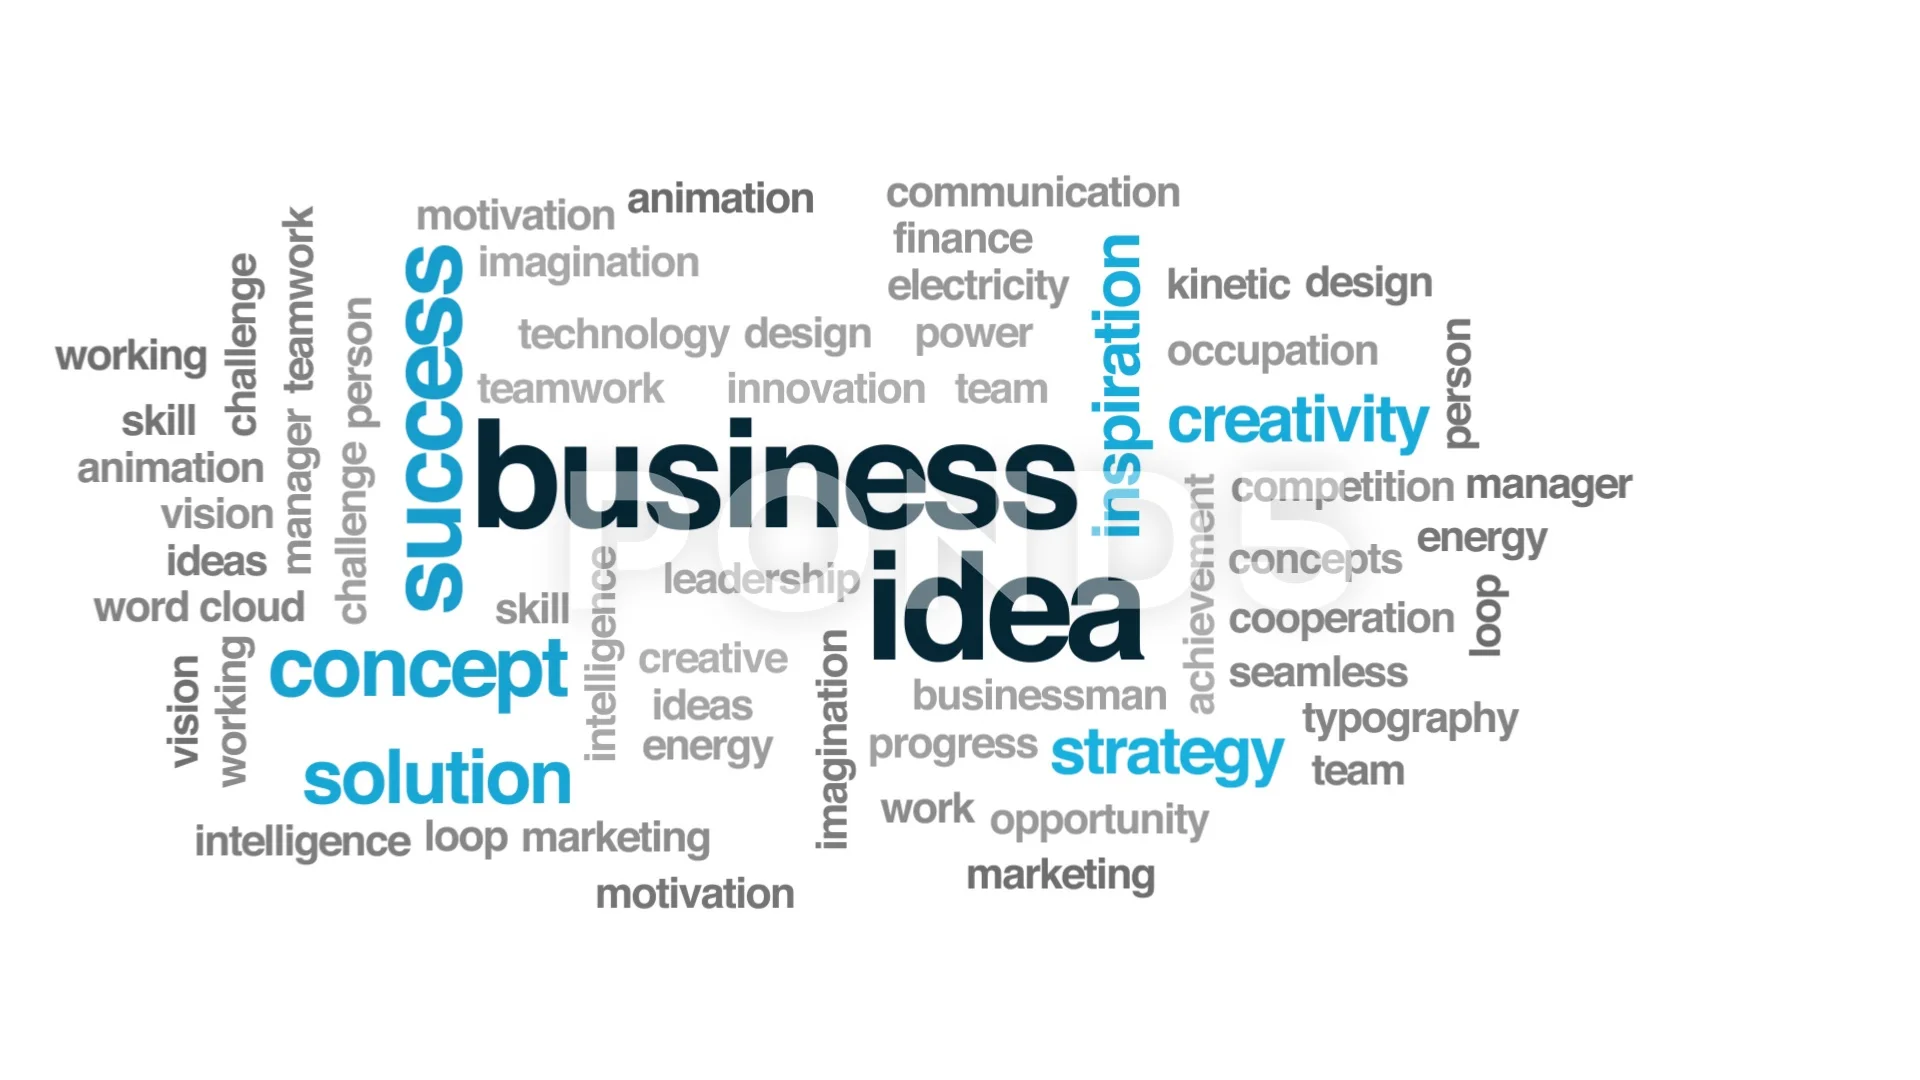 Business idea animated word cloud. Kinet... | Stock Video | Pond5